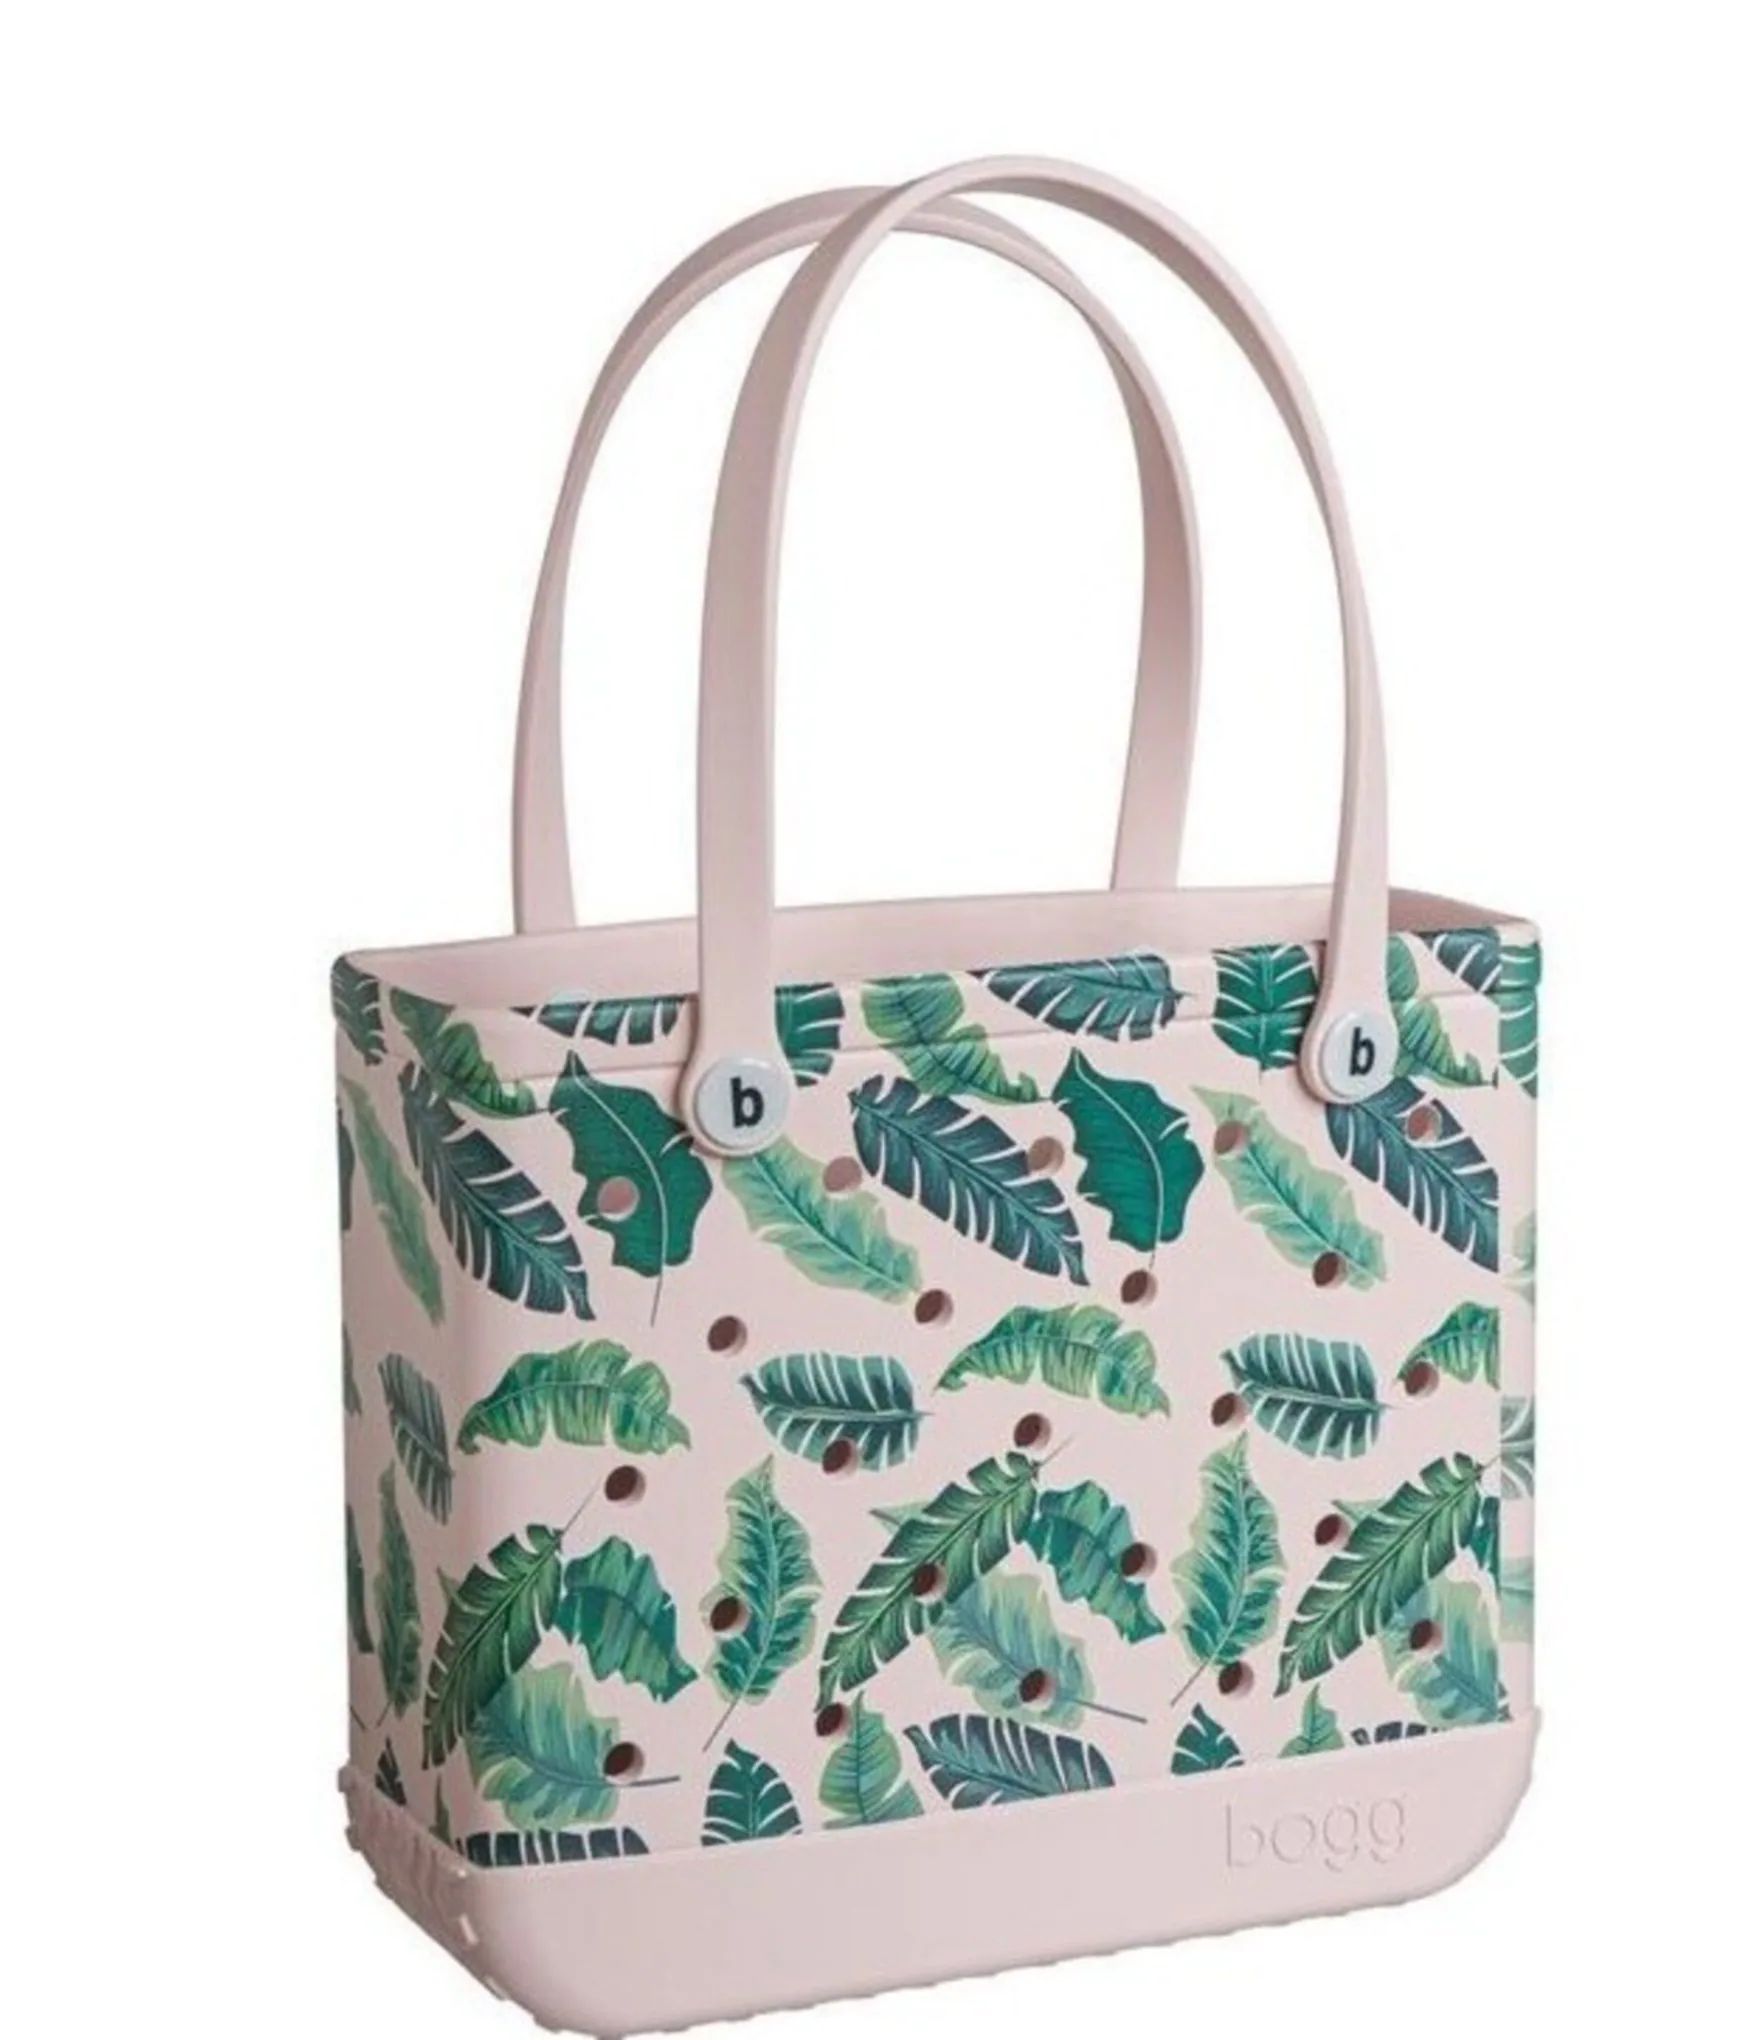 Bogg Bag Baby Bogg Palm Print Tote Bag | Dillard's | Dillards